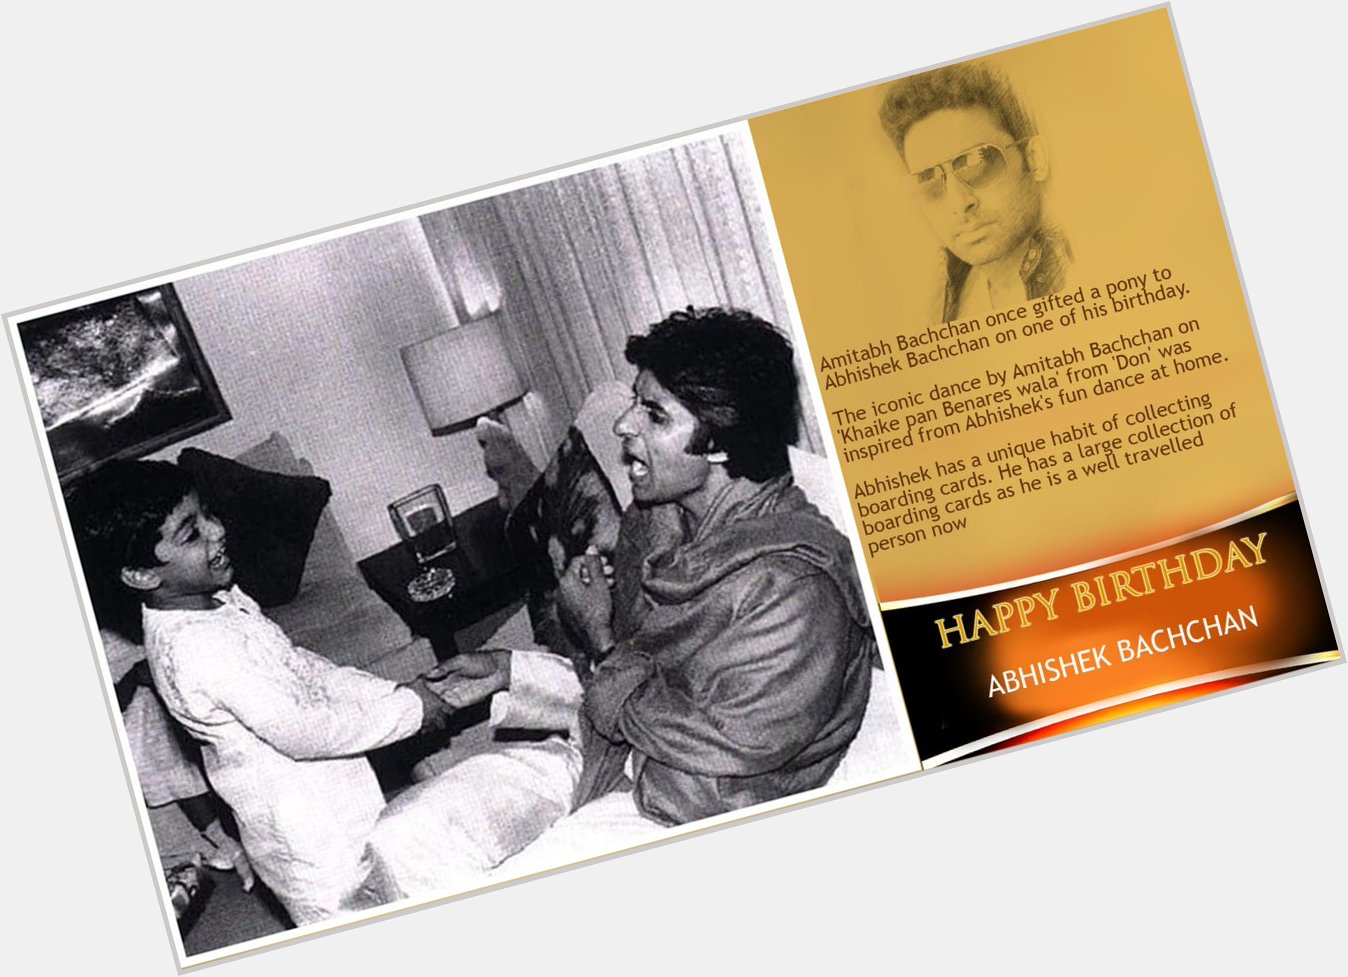  Wishing Abhishek Bachchan a very Happy Birthday! 